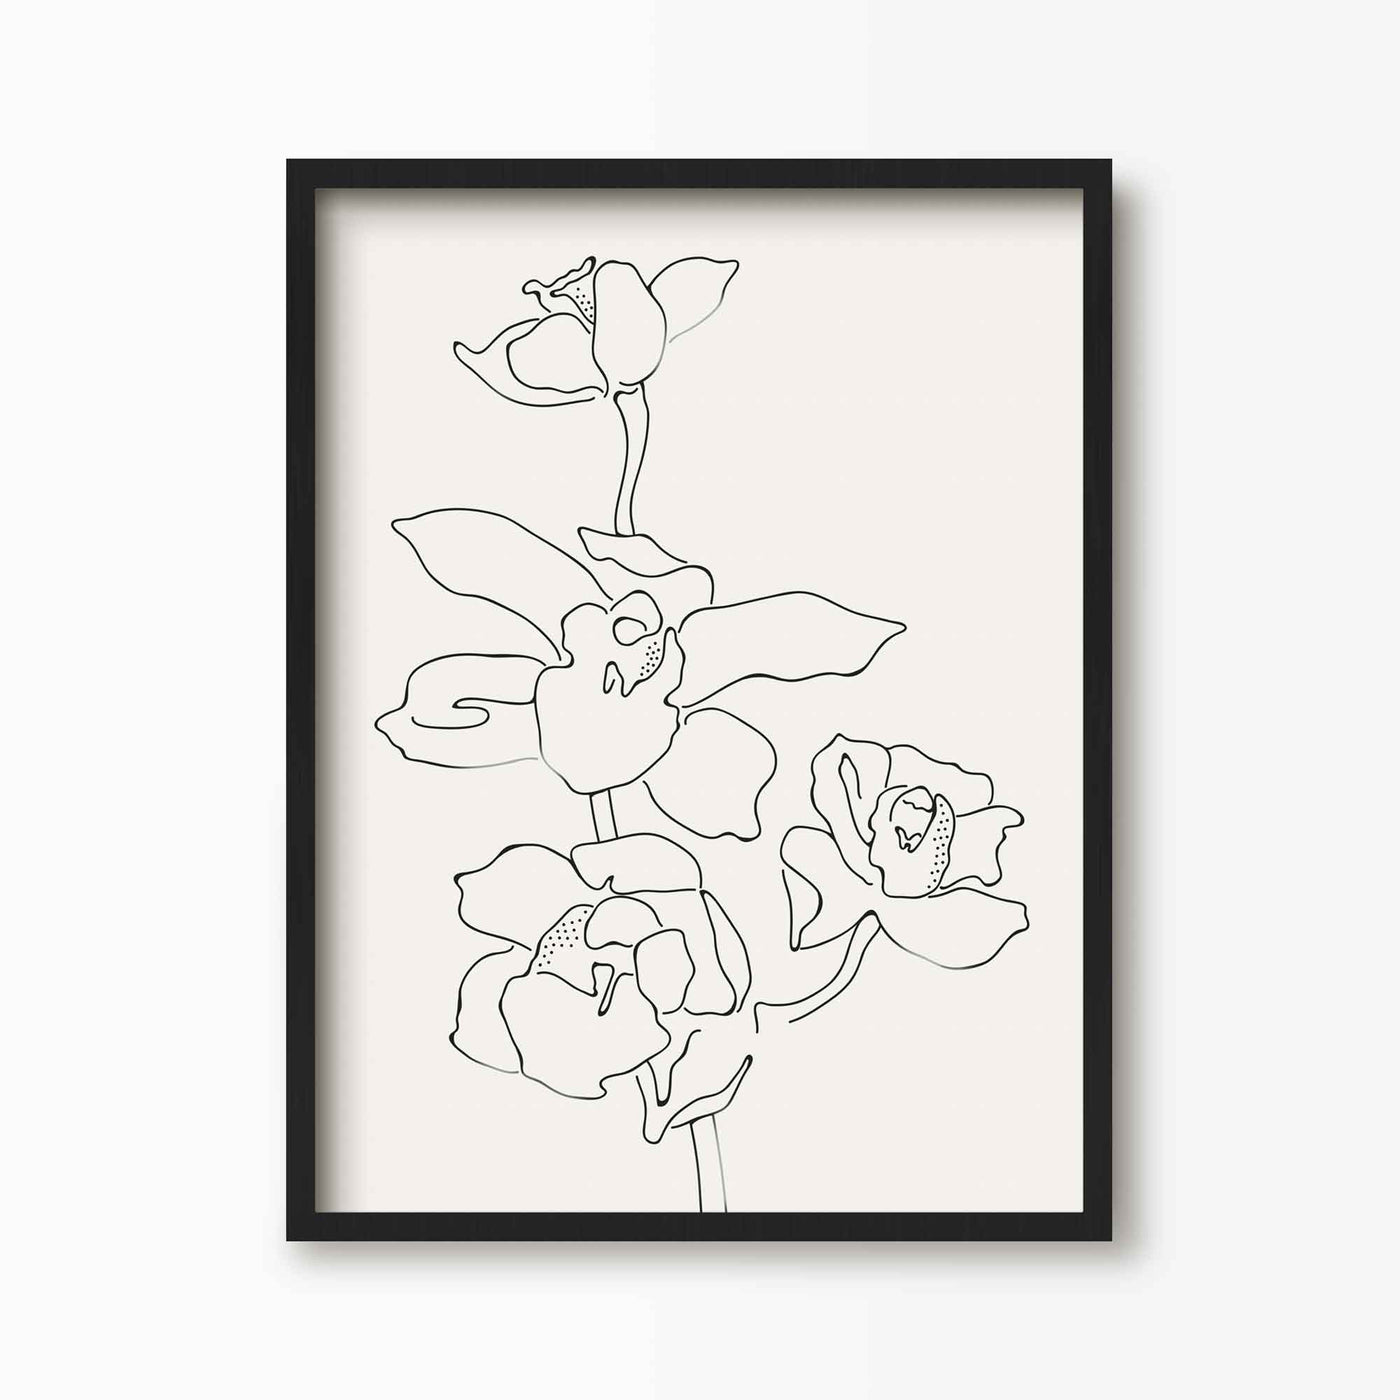 Green Lili 30x40cm (12x16") / Black Frame Orchid Flowers 2 Line Art Print